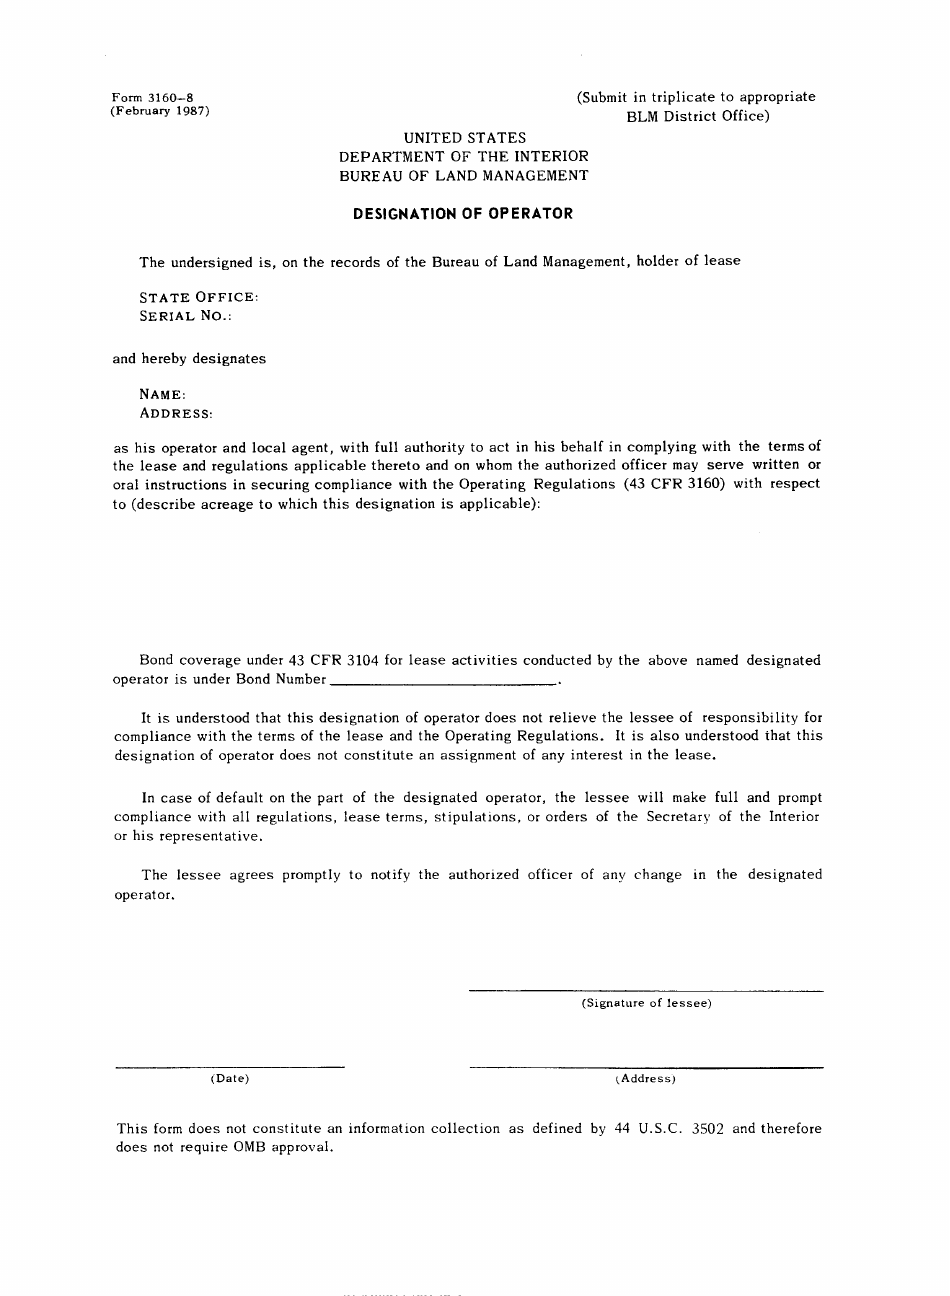 BLM Form 3160-8 Designation of Operator, Page 1